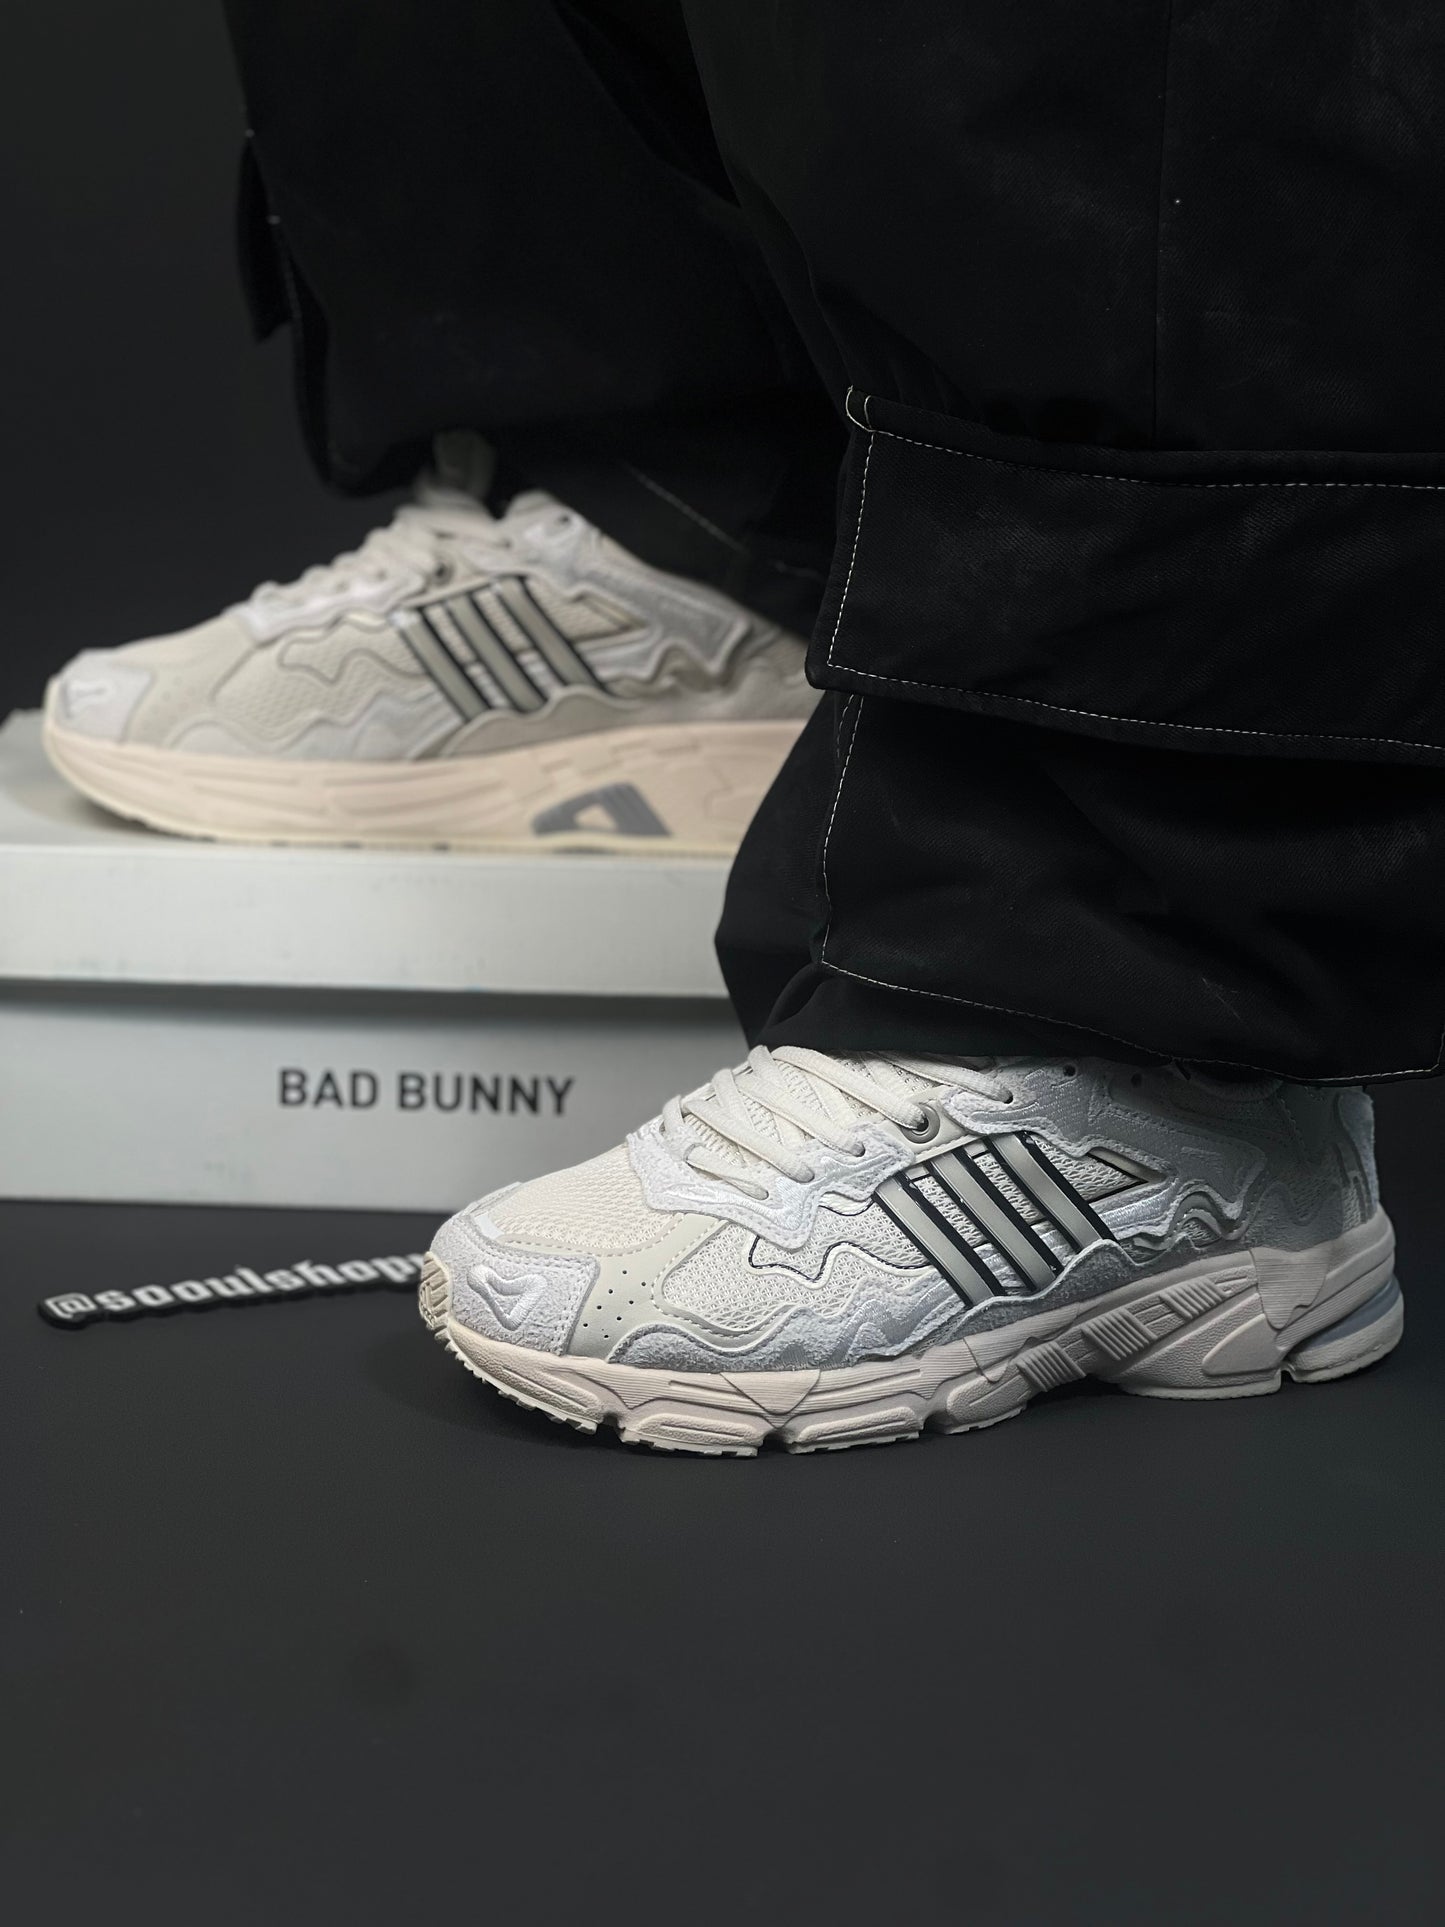 Adidas Response CL x Bad Bunny 'Wonder White'